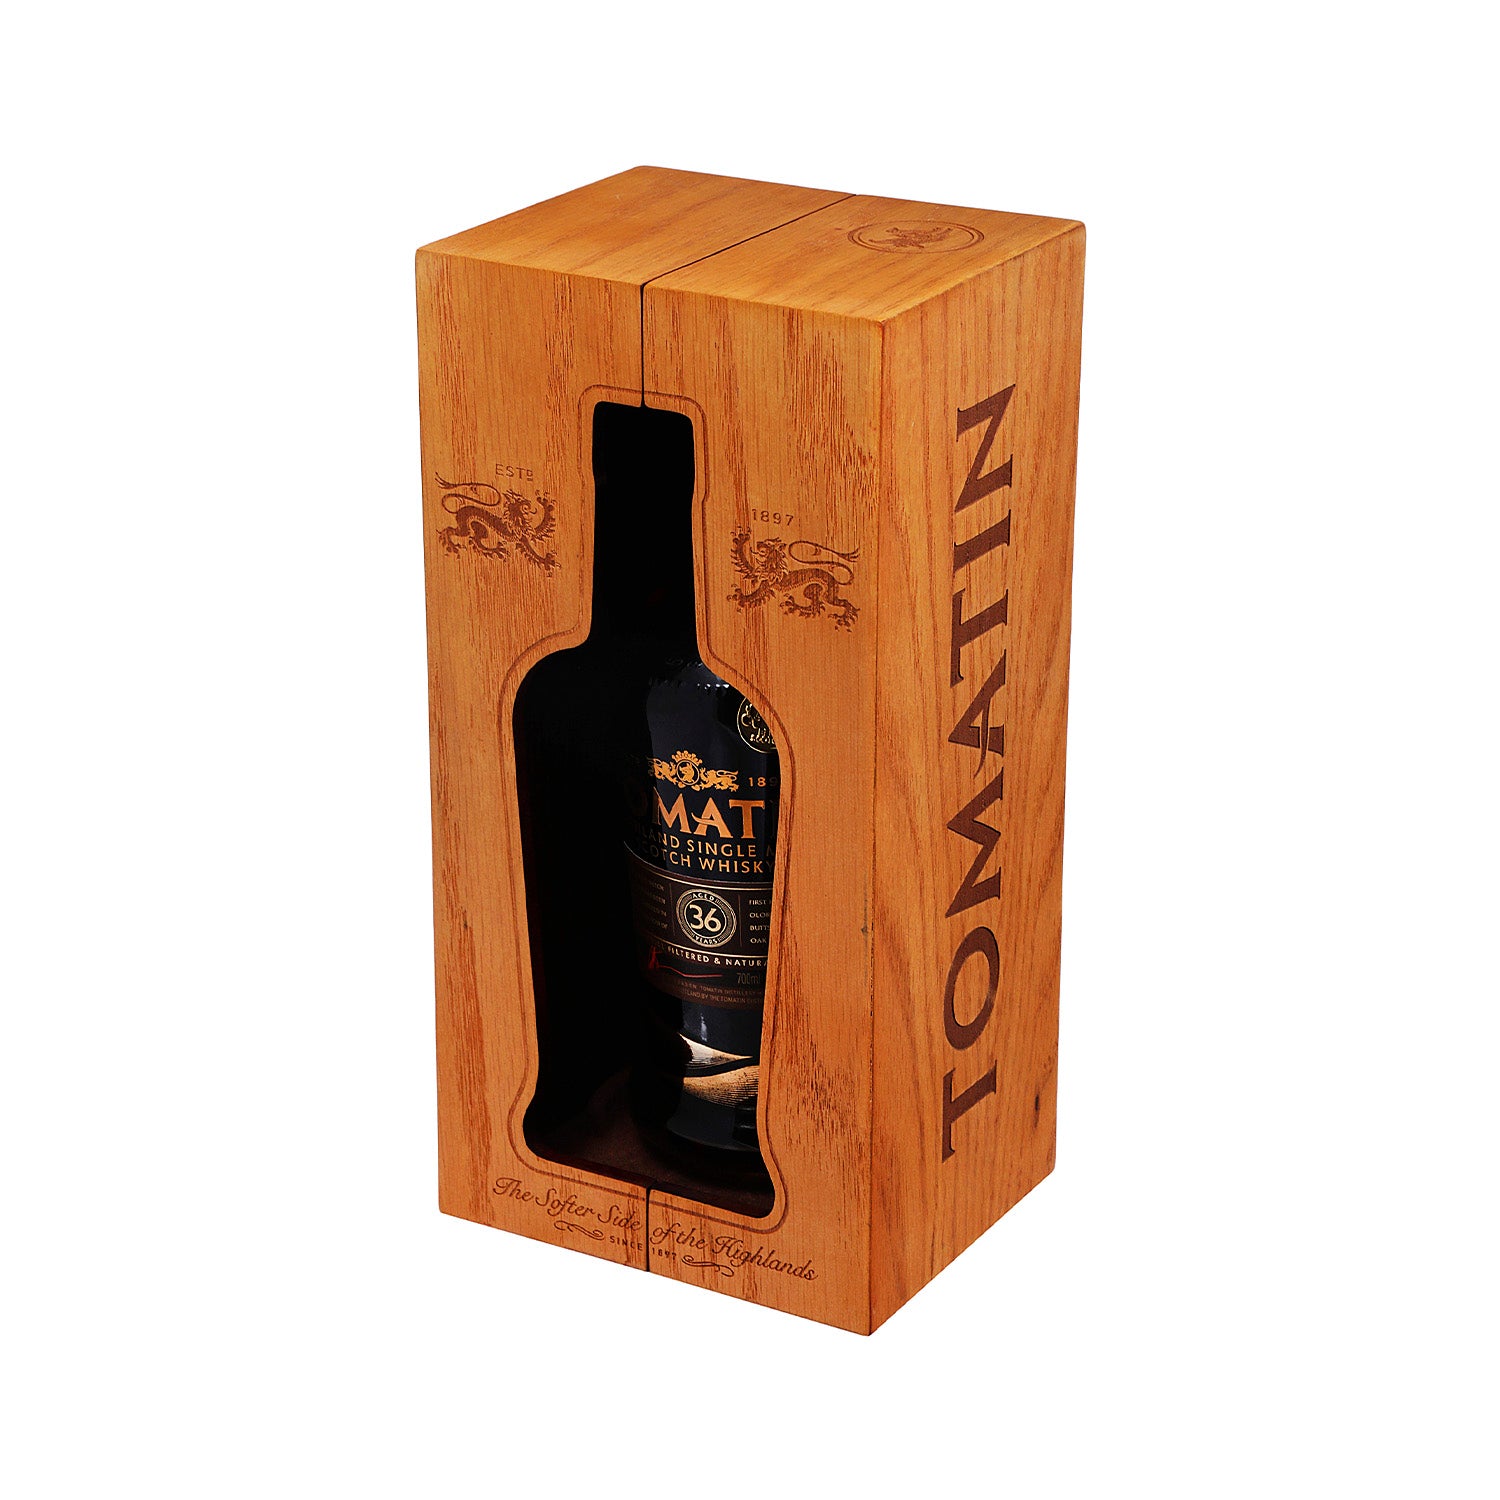 Whisky - Tomatin 36 años - 700 ml